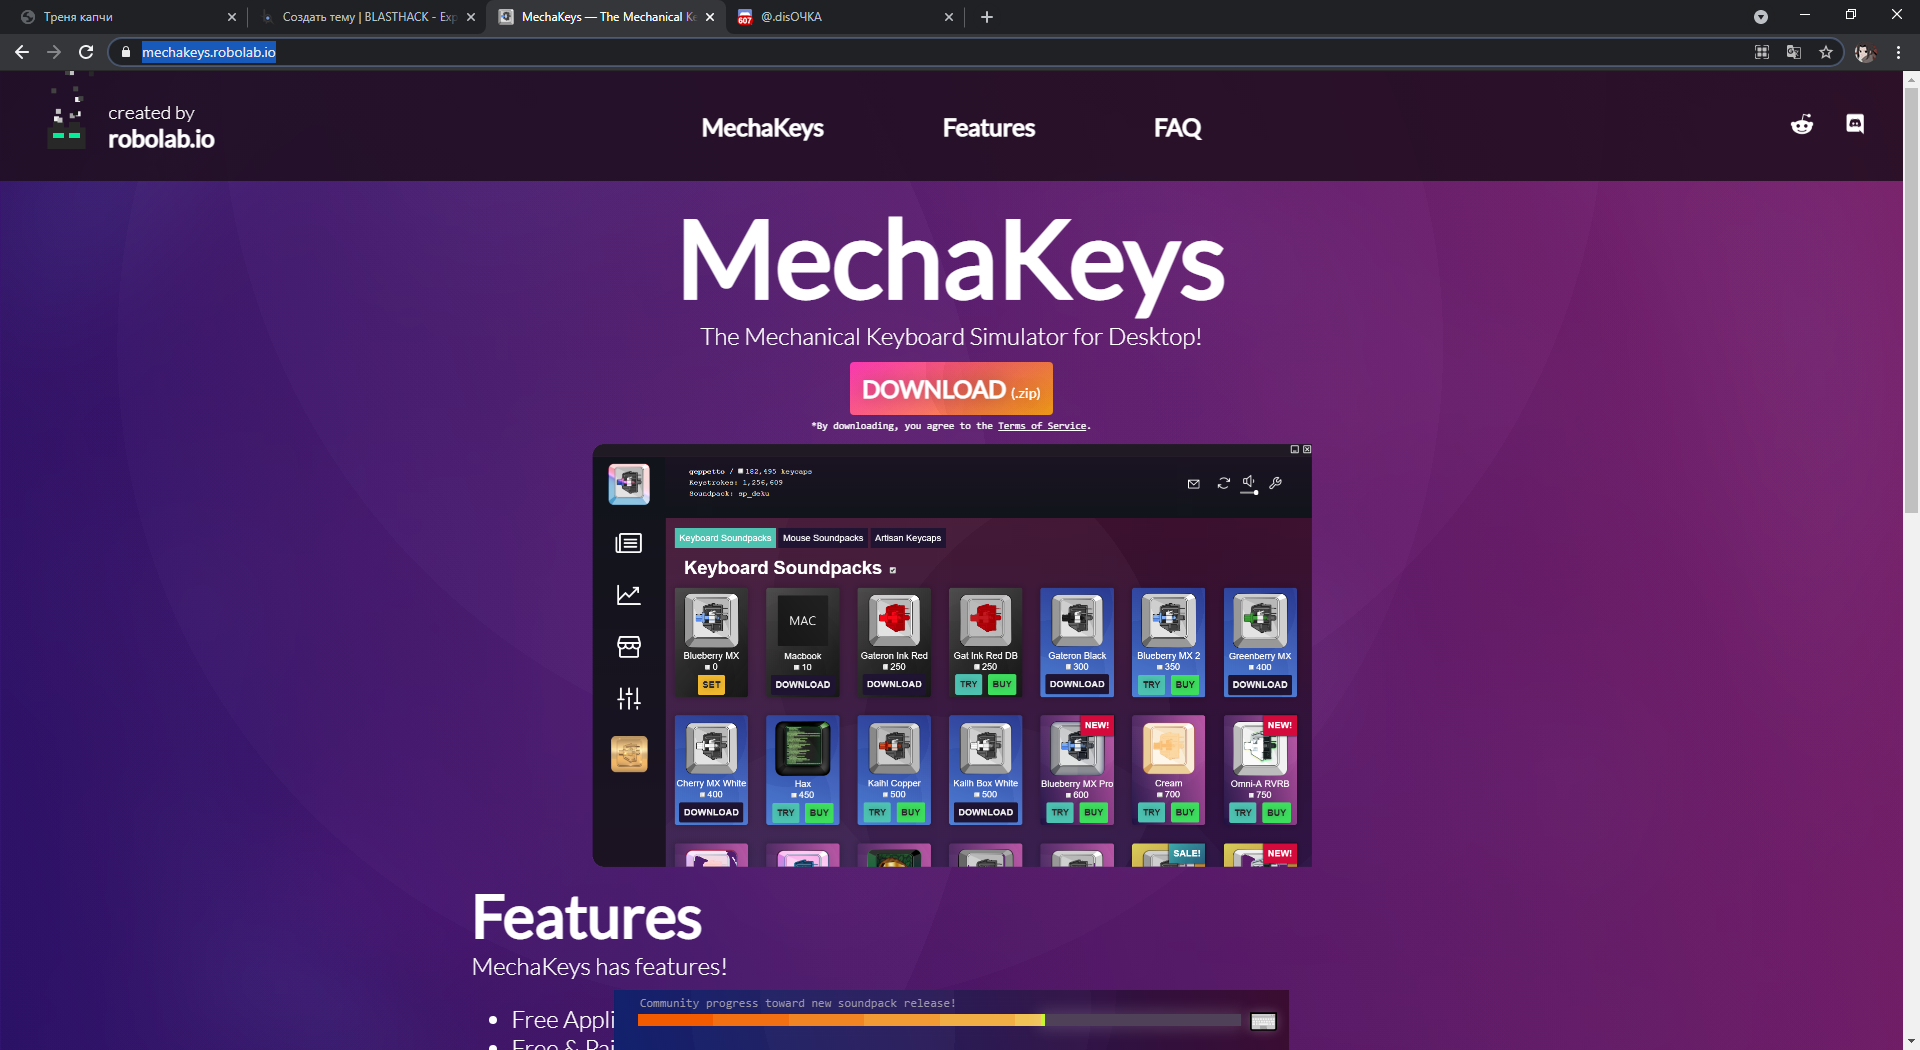 Mechakeys download page